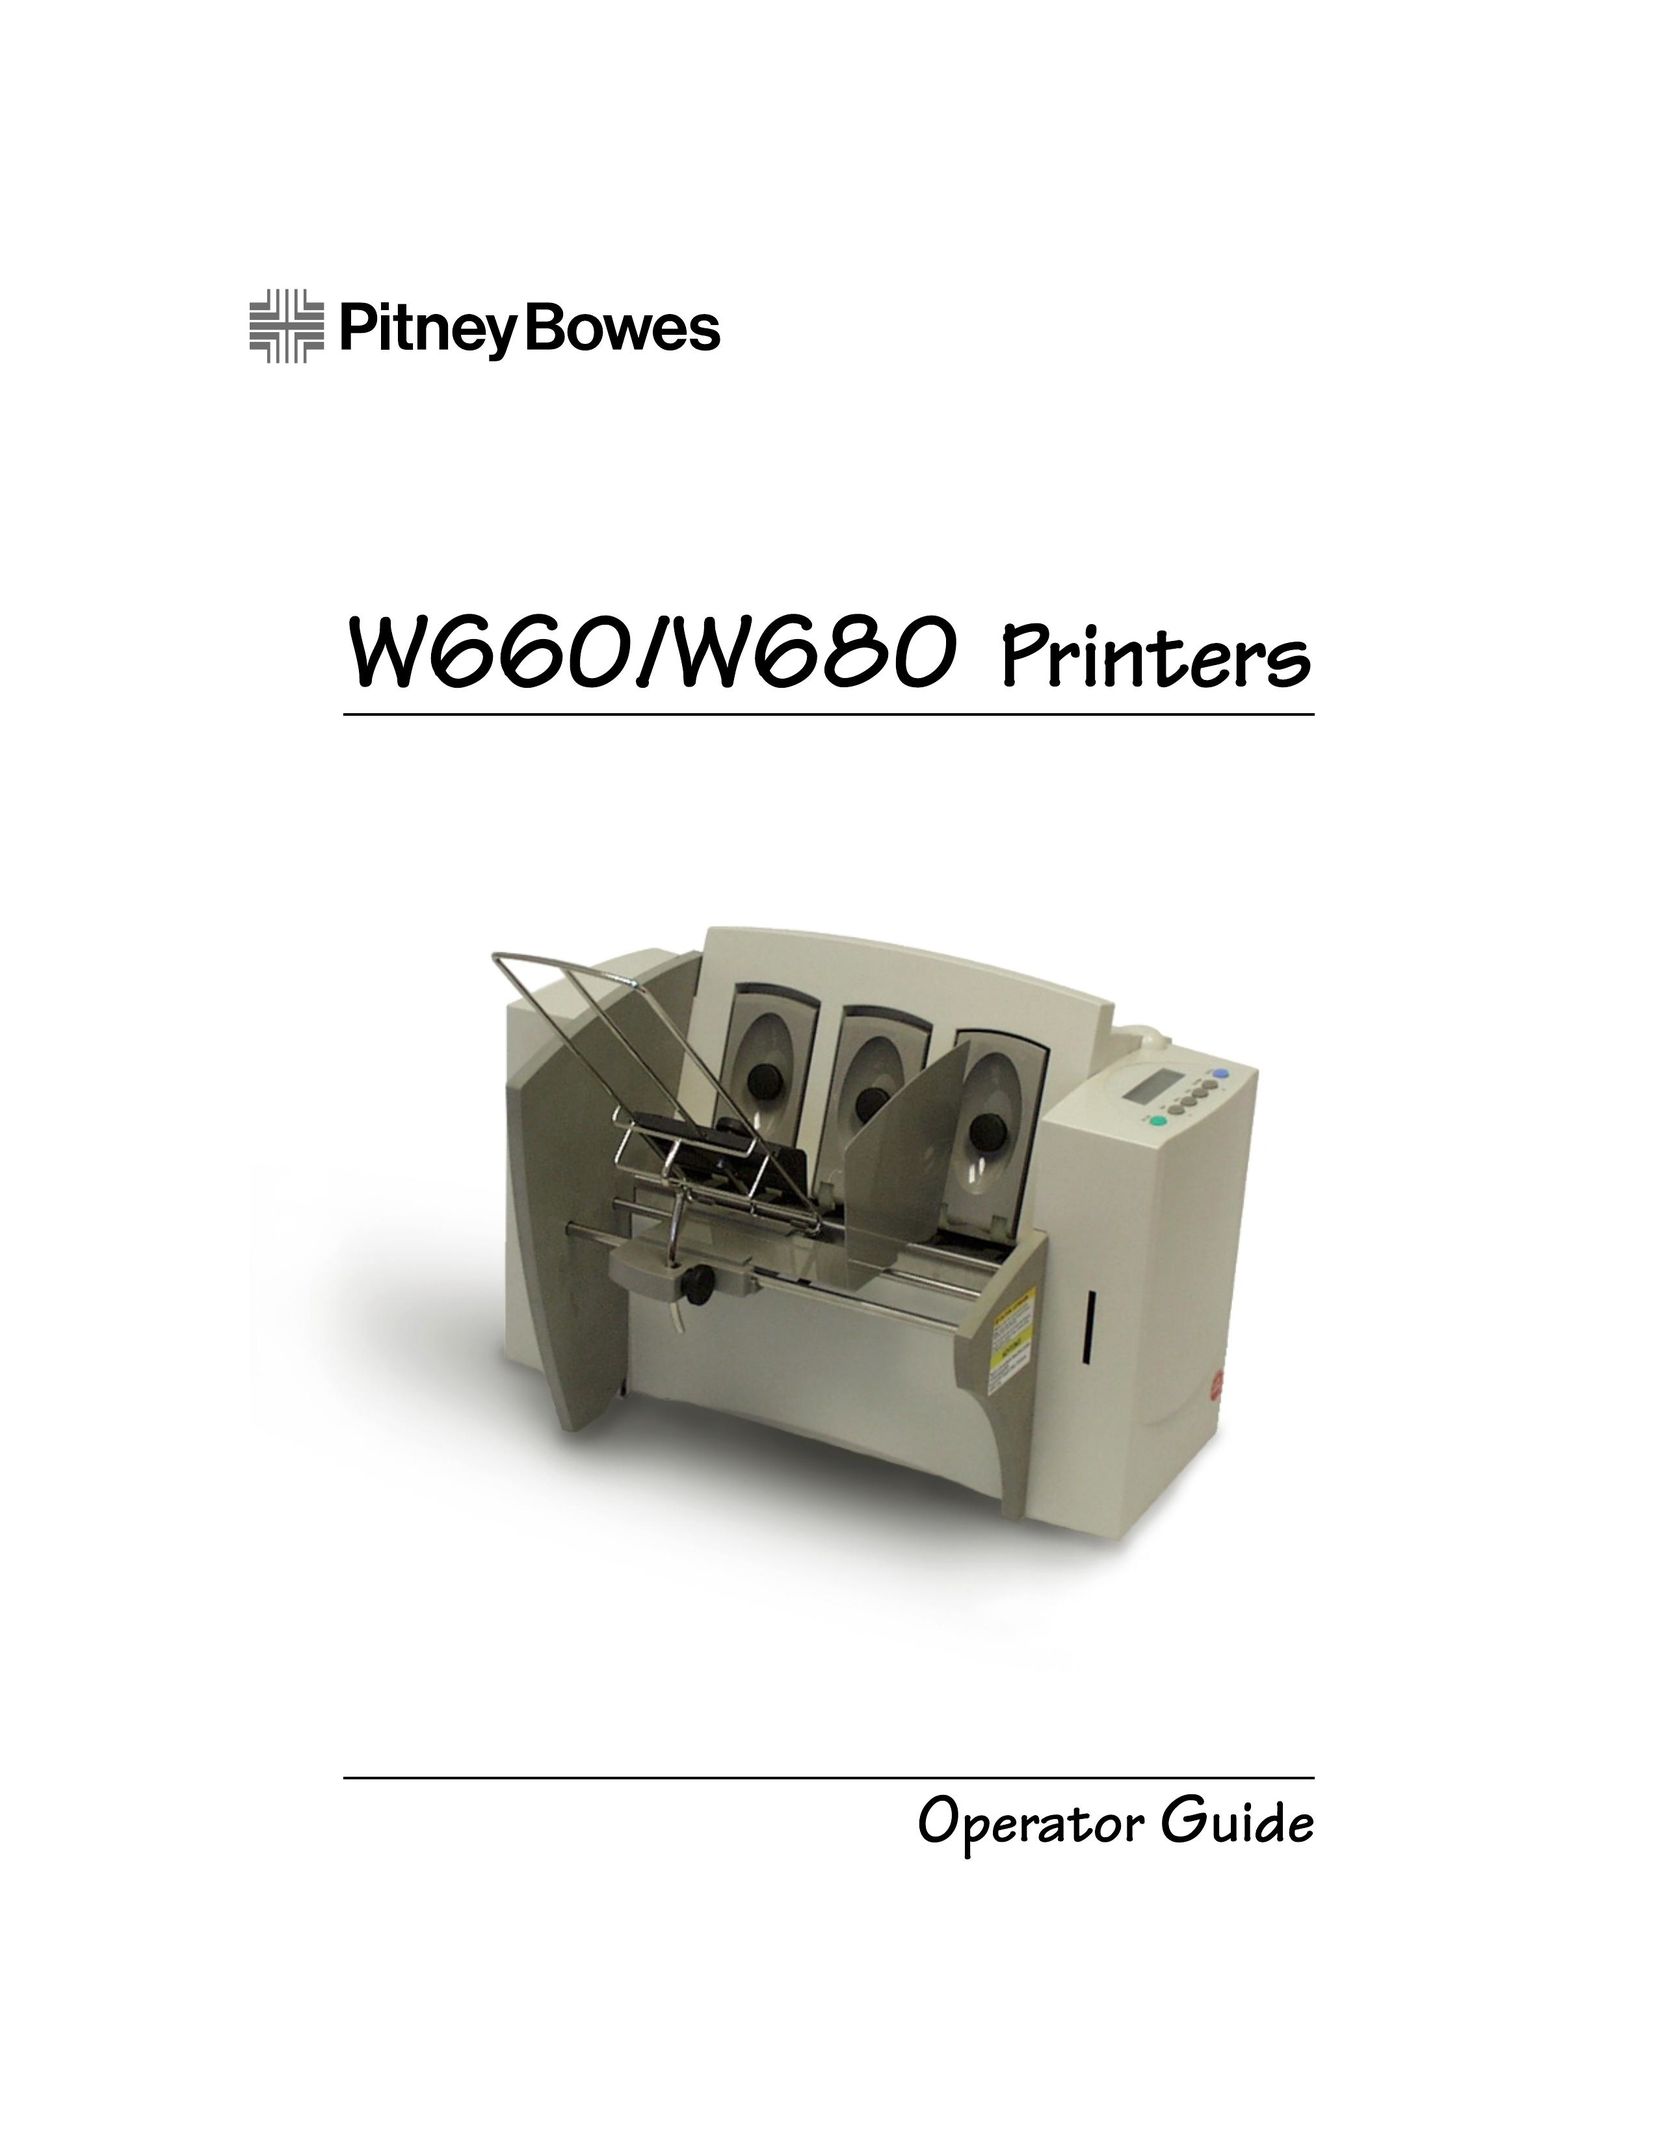 Pitney Bowes W660 Printer User Manual